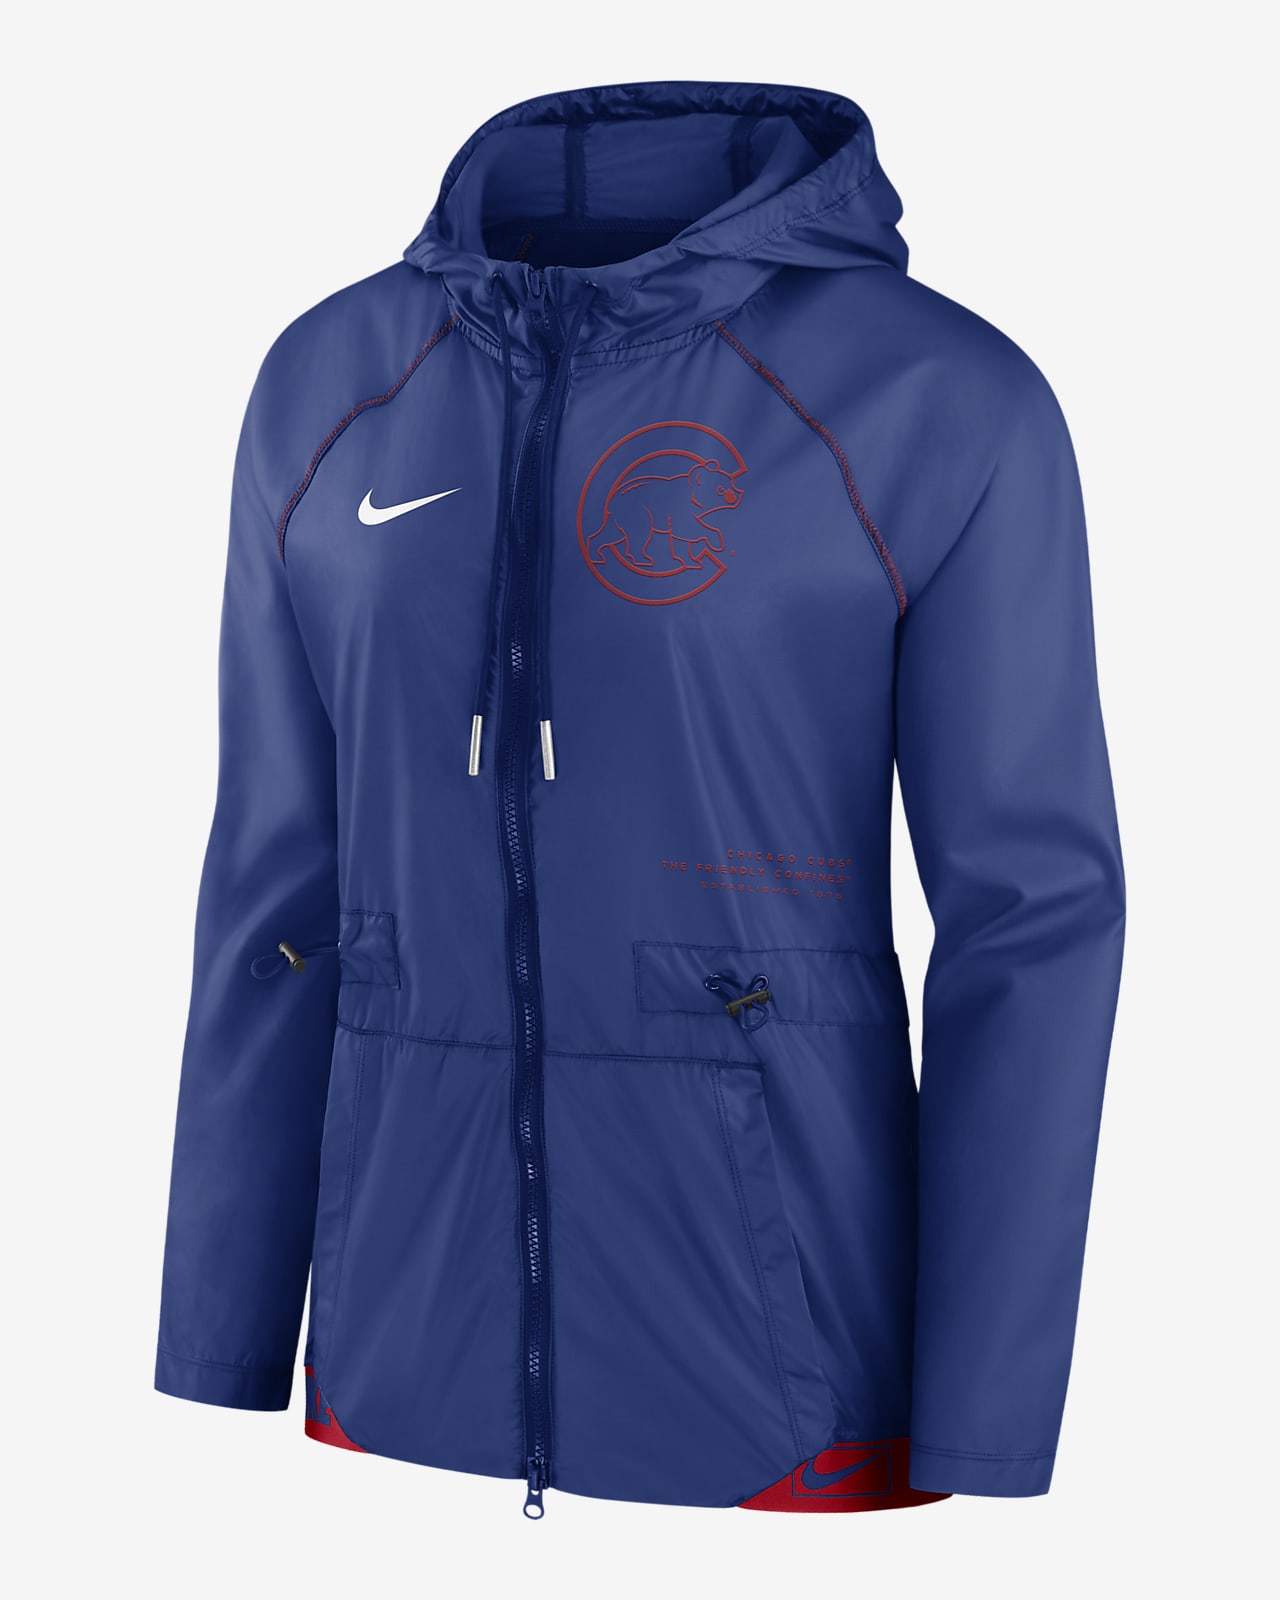 Nike Statement (MLB Chicago Cubs) Women's Full-Zip Jacket